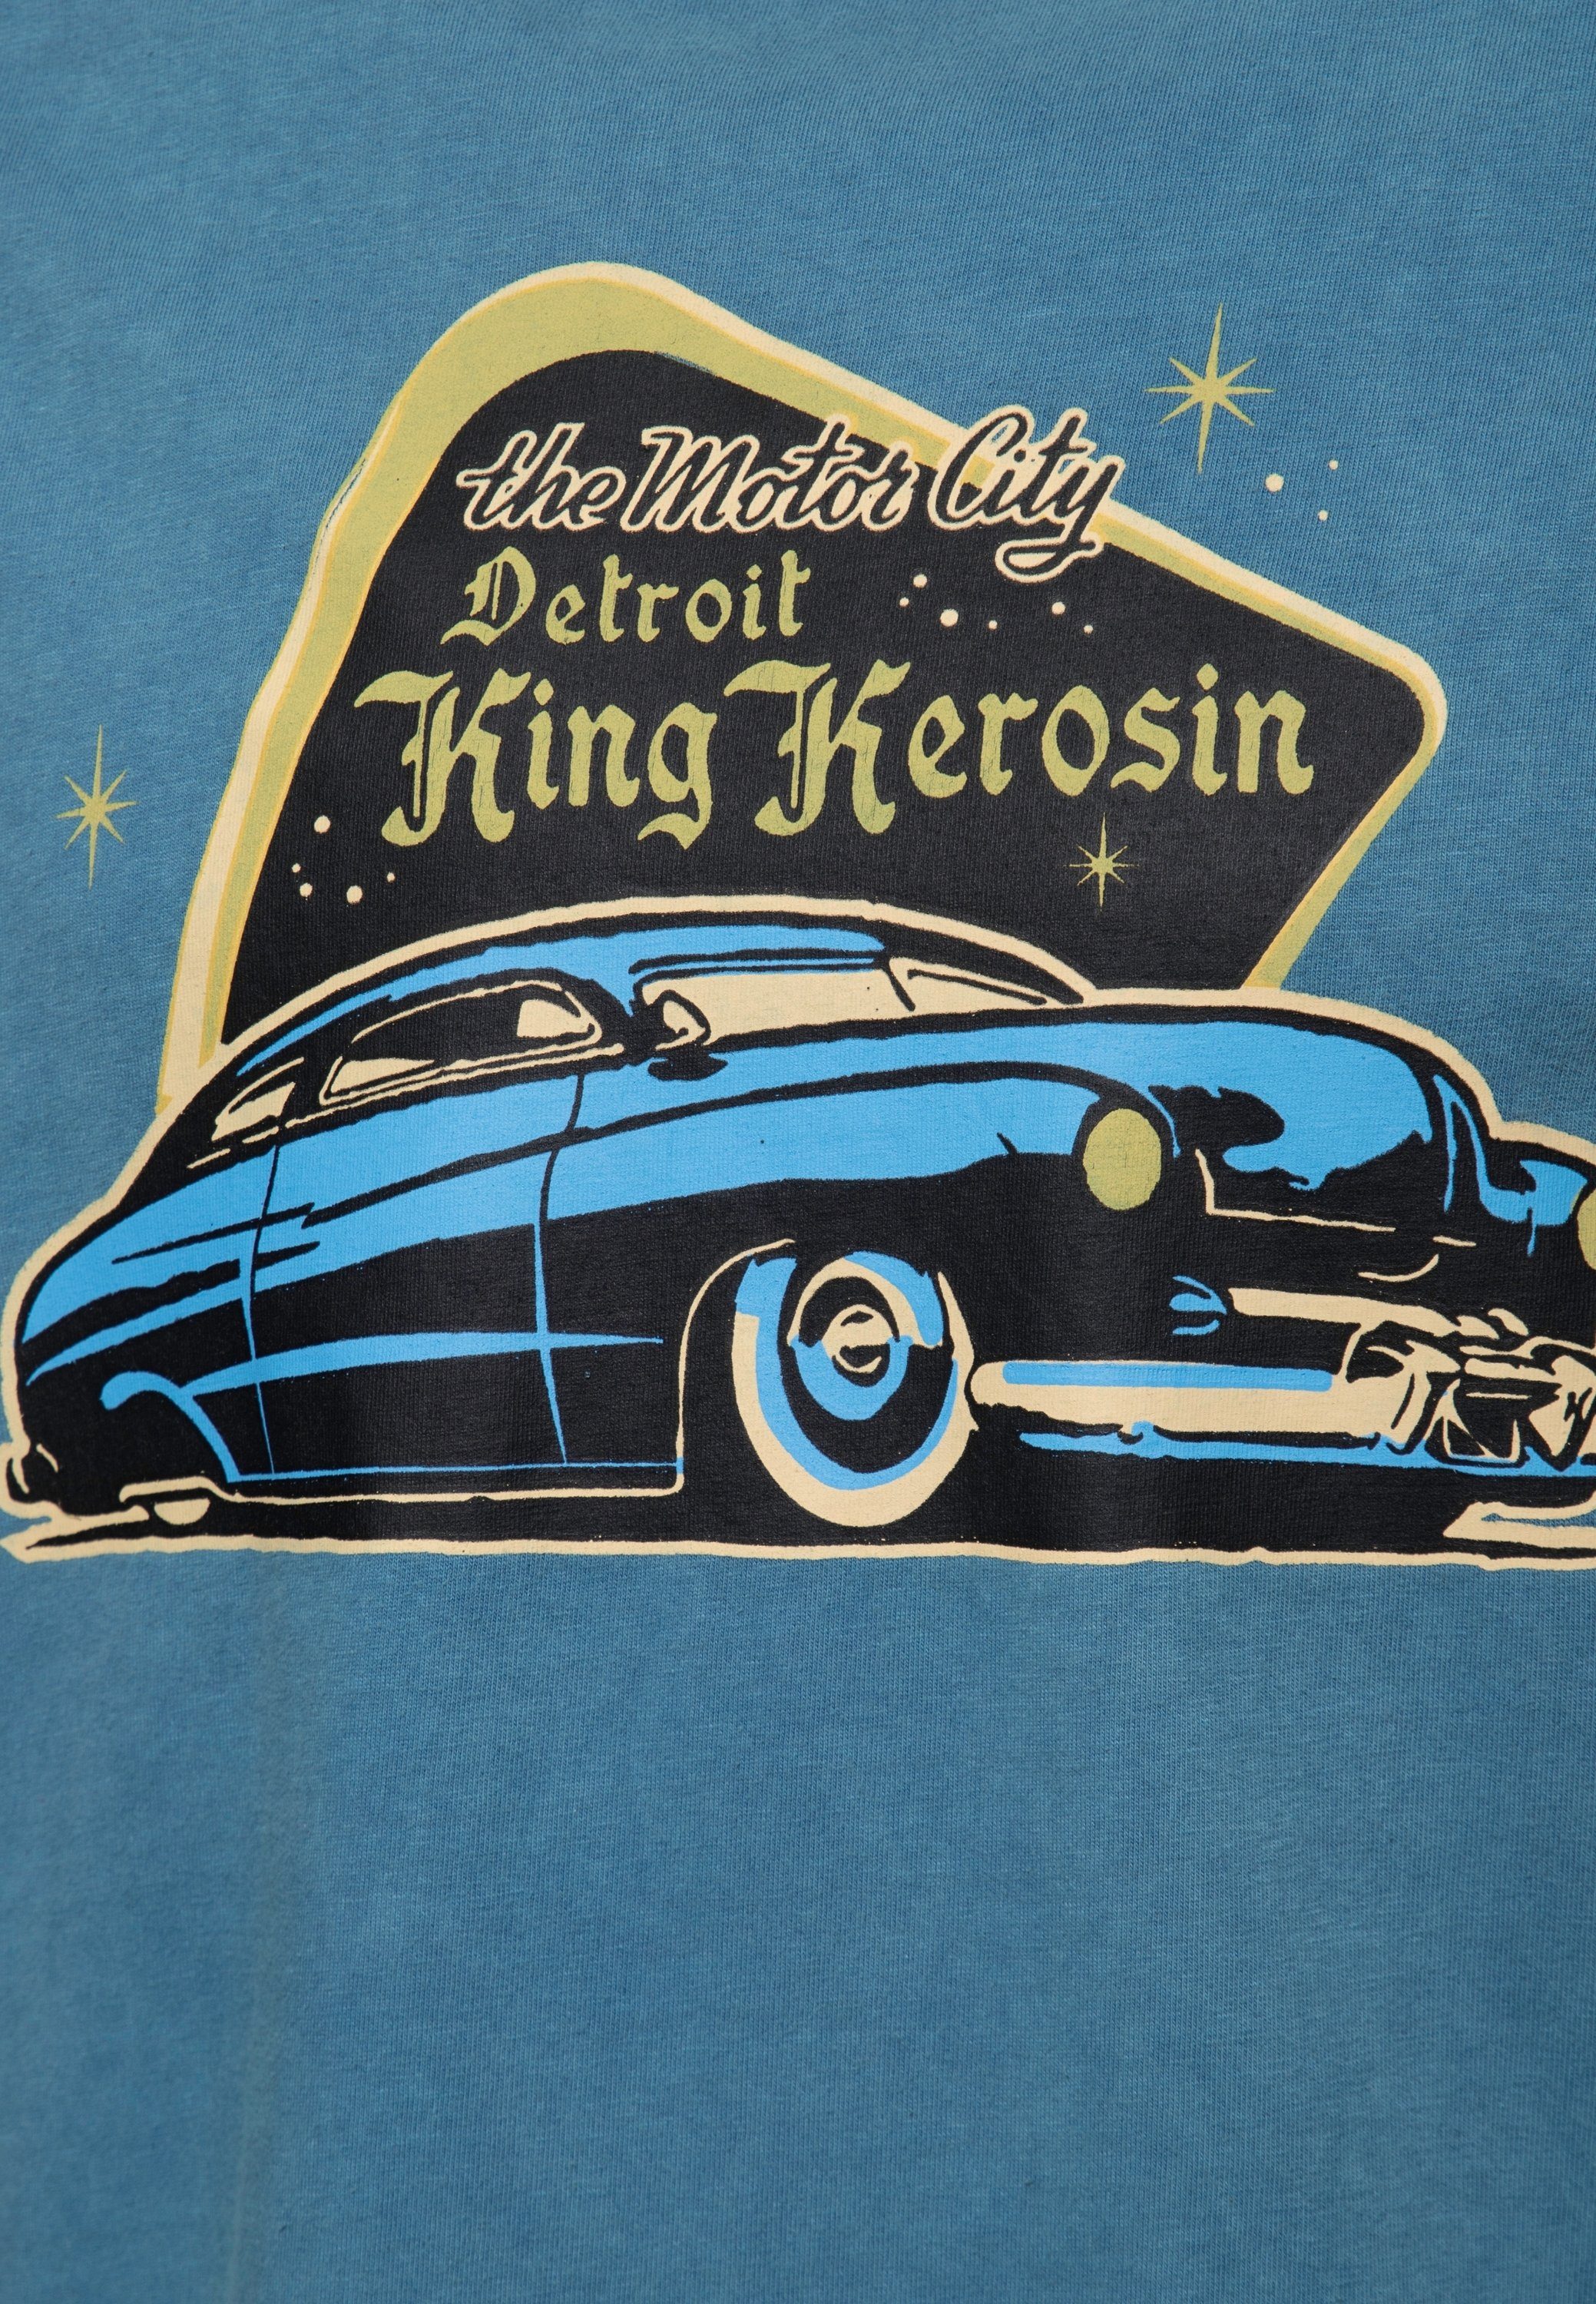 KingKerosin Print-Shirt Detroit blau Oil-Washed Greaser